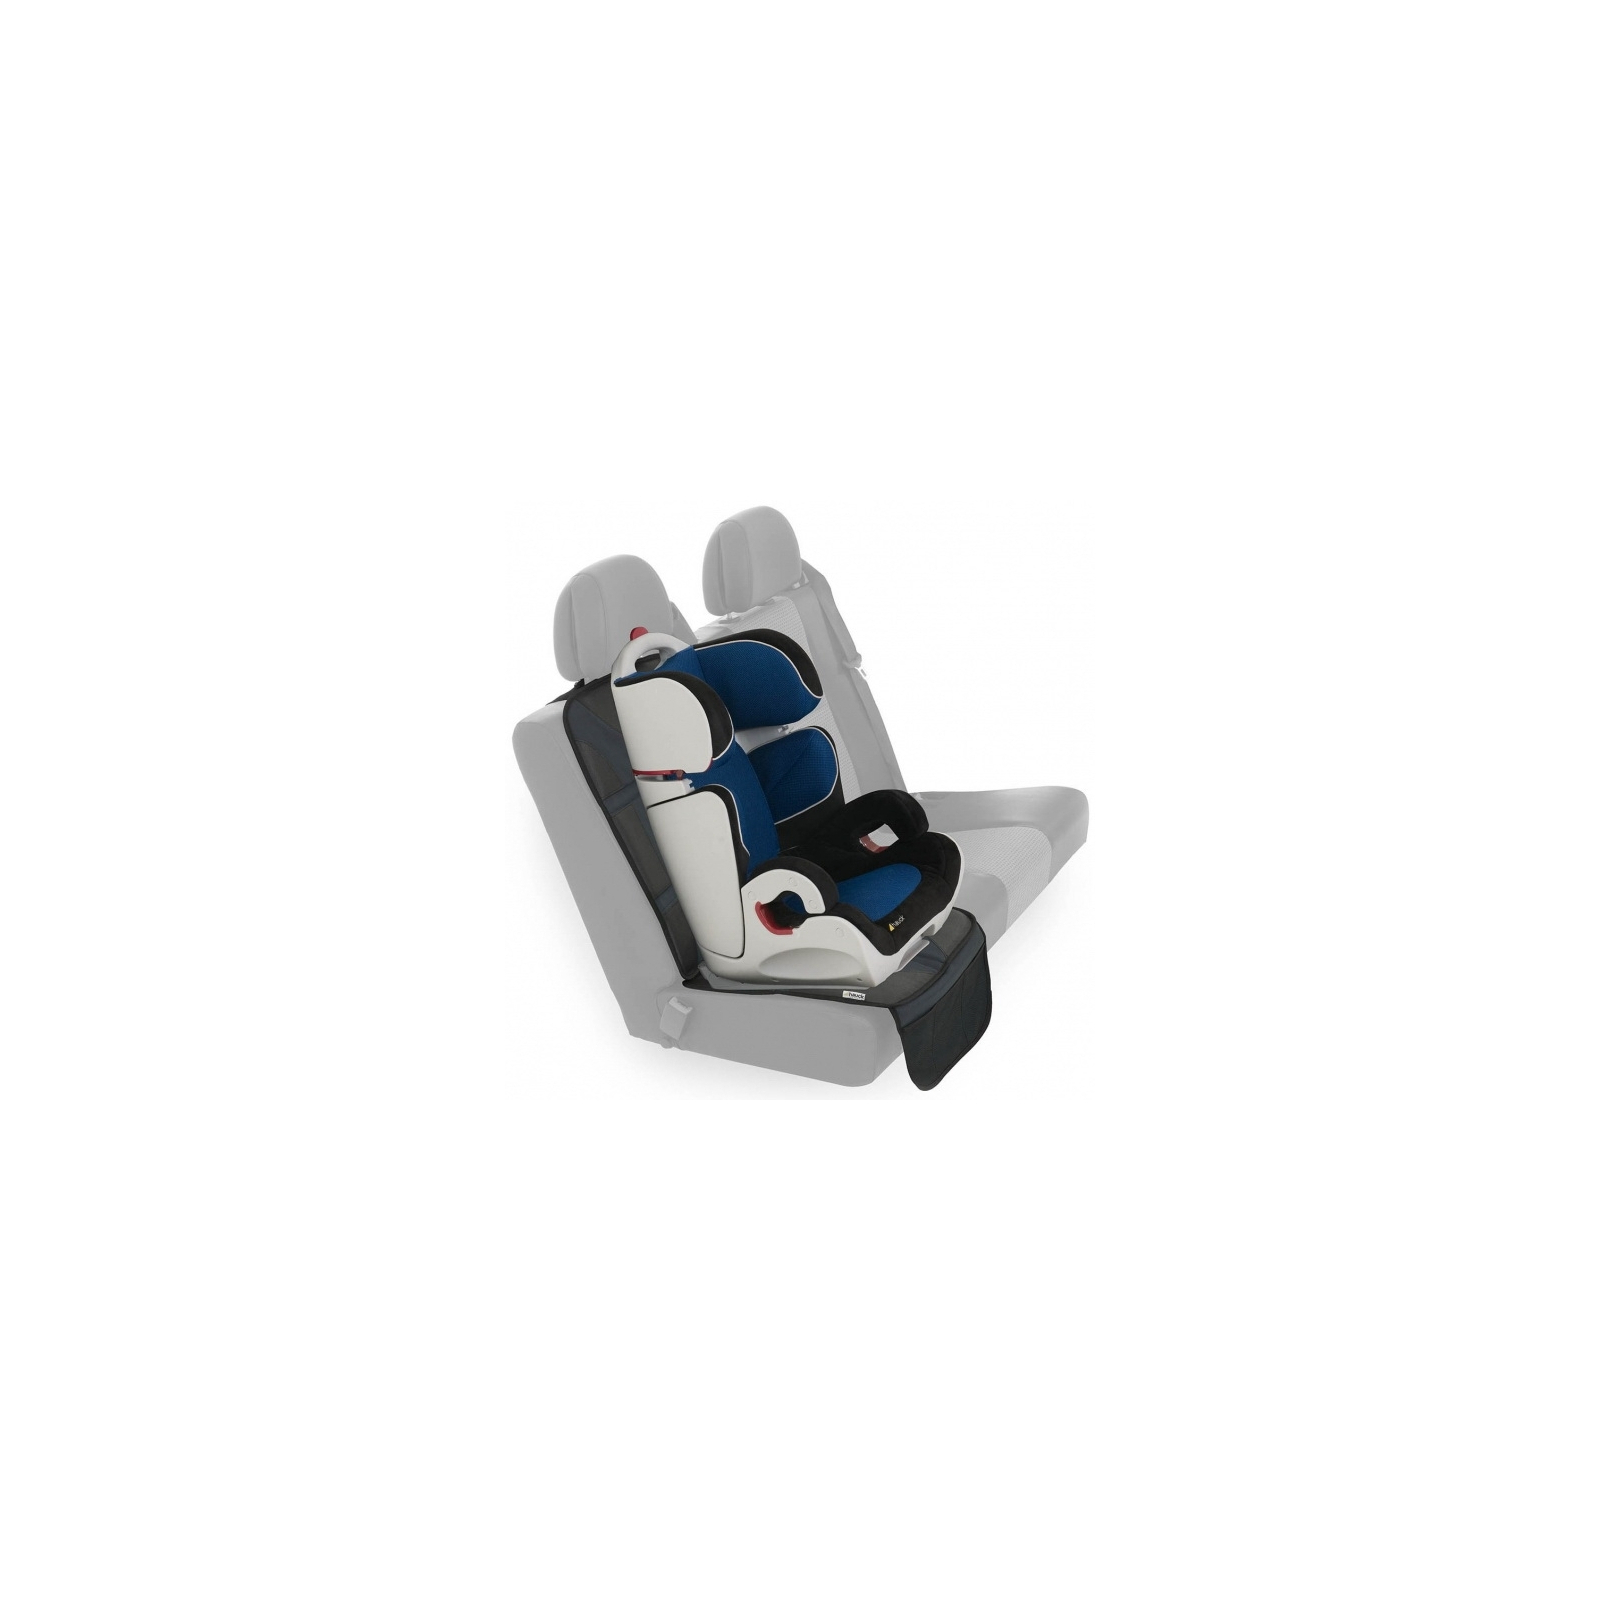 Защитный коврик Hauck под автокресло Sit On Me Deluxe (61802-8) изображение 4